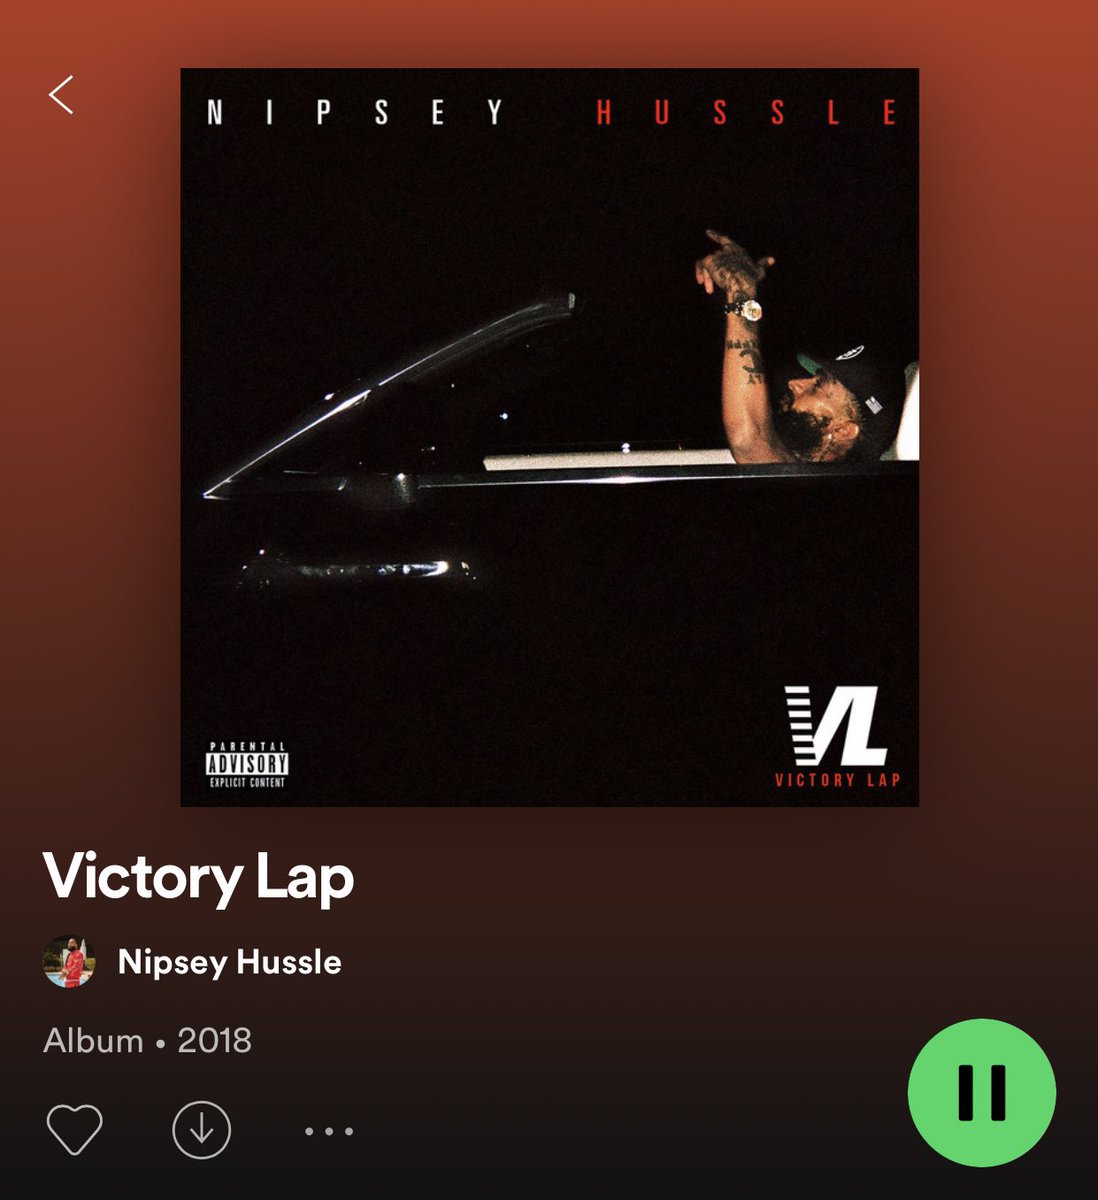 Nipsey Hussle - Victory Lap ðŸ”¥ ðŸ”¥ ðŸ”¥. 